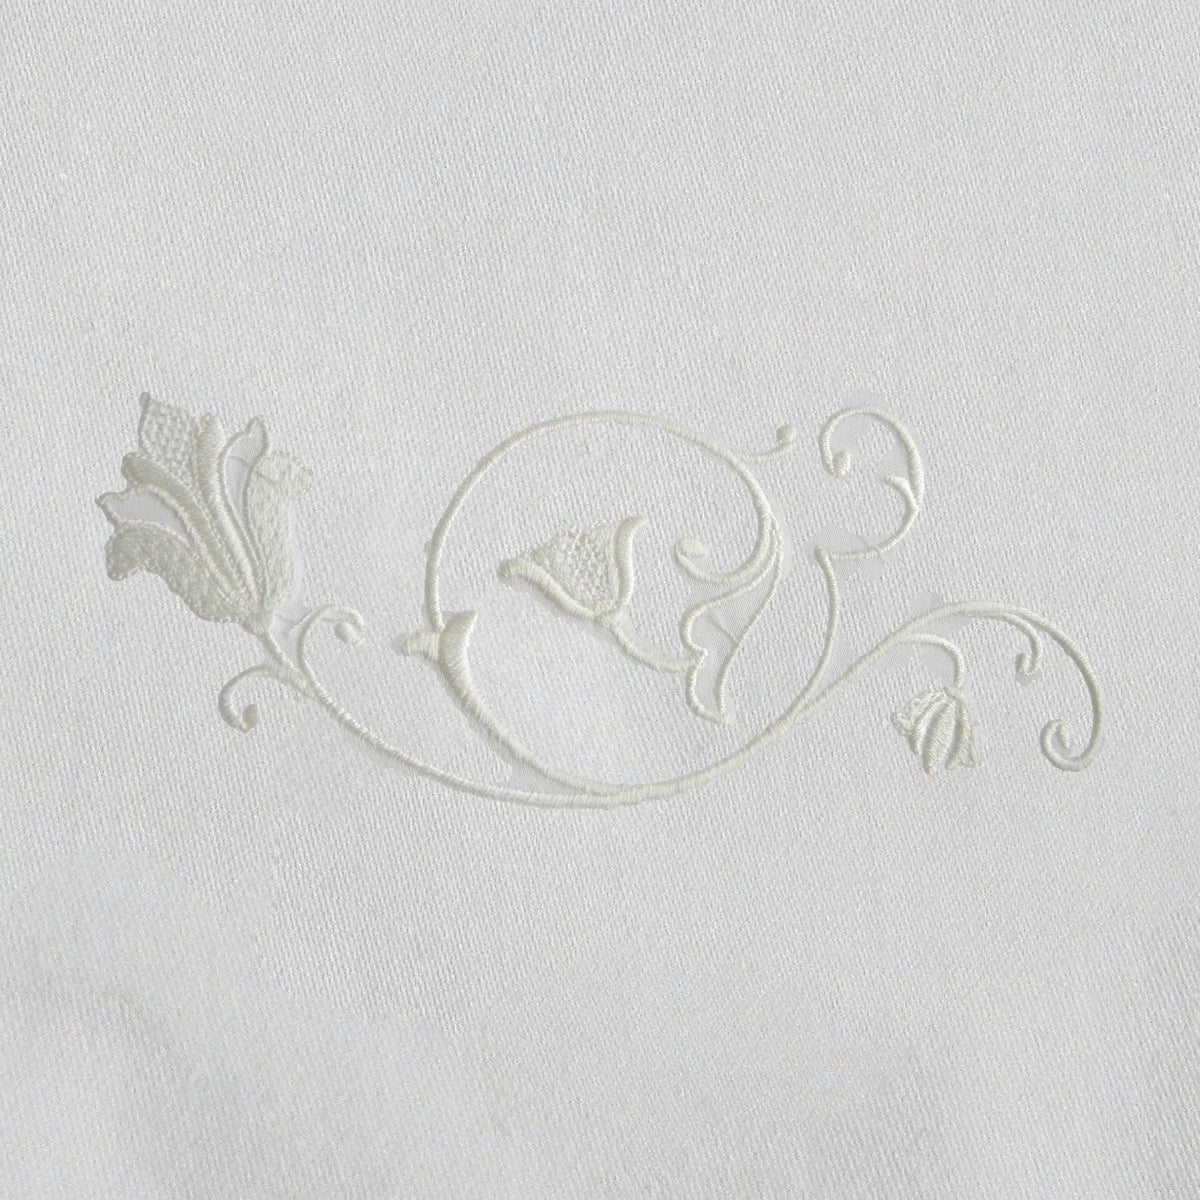  Dea Broccato Embroidered Bedding Swatch White/Ivory Fine Linens